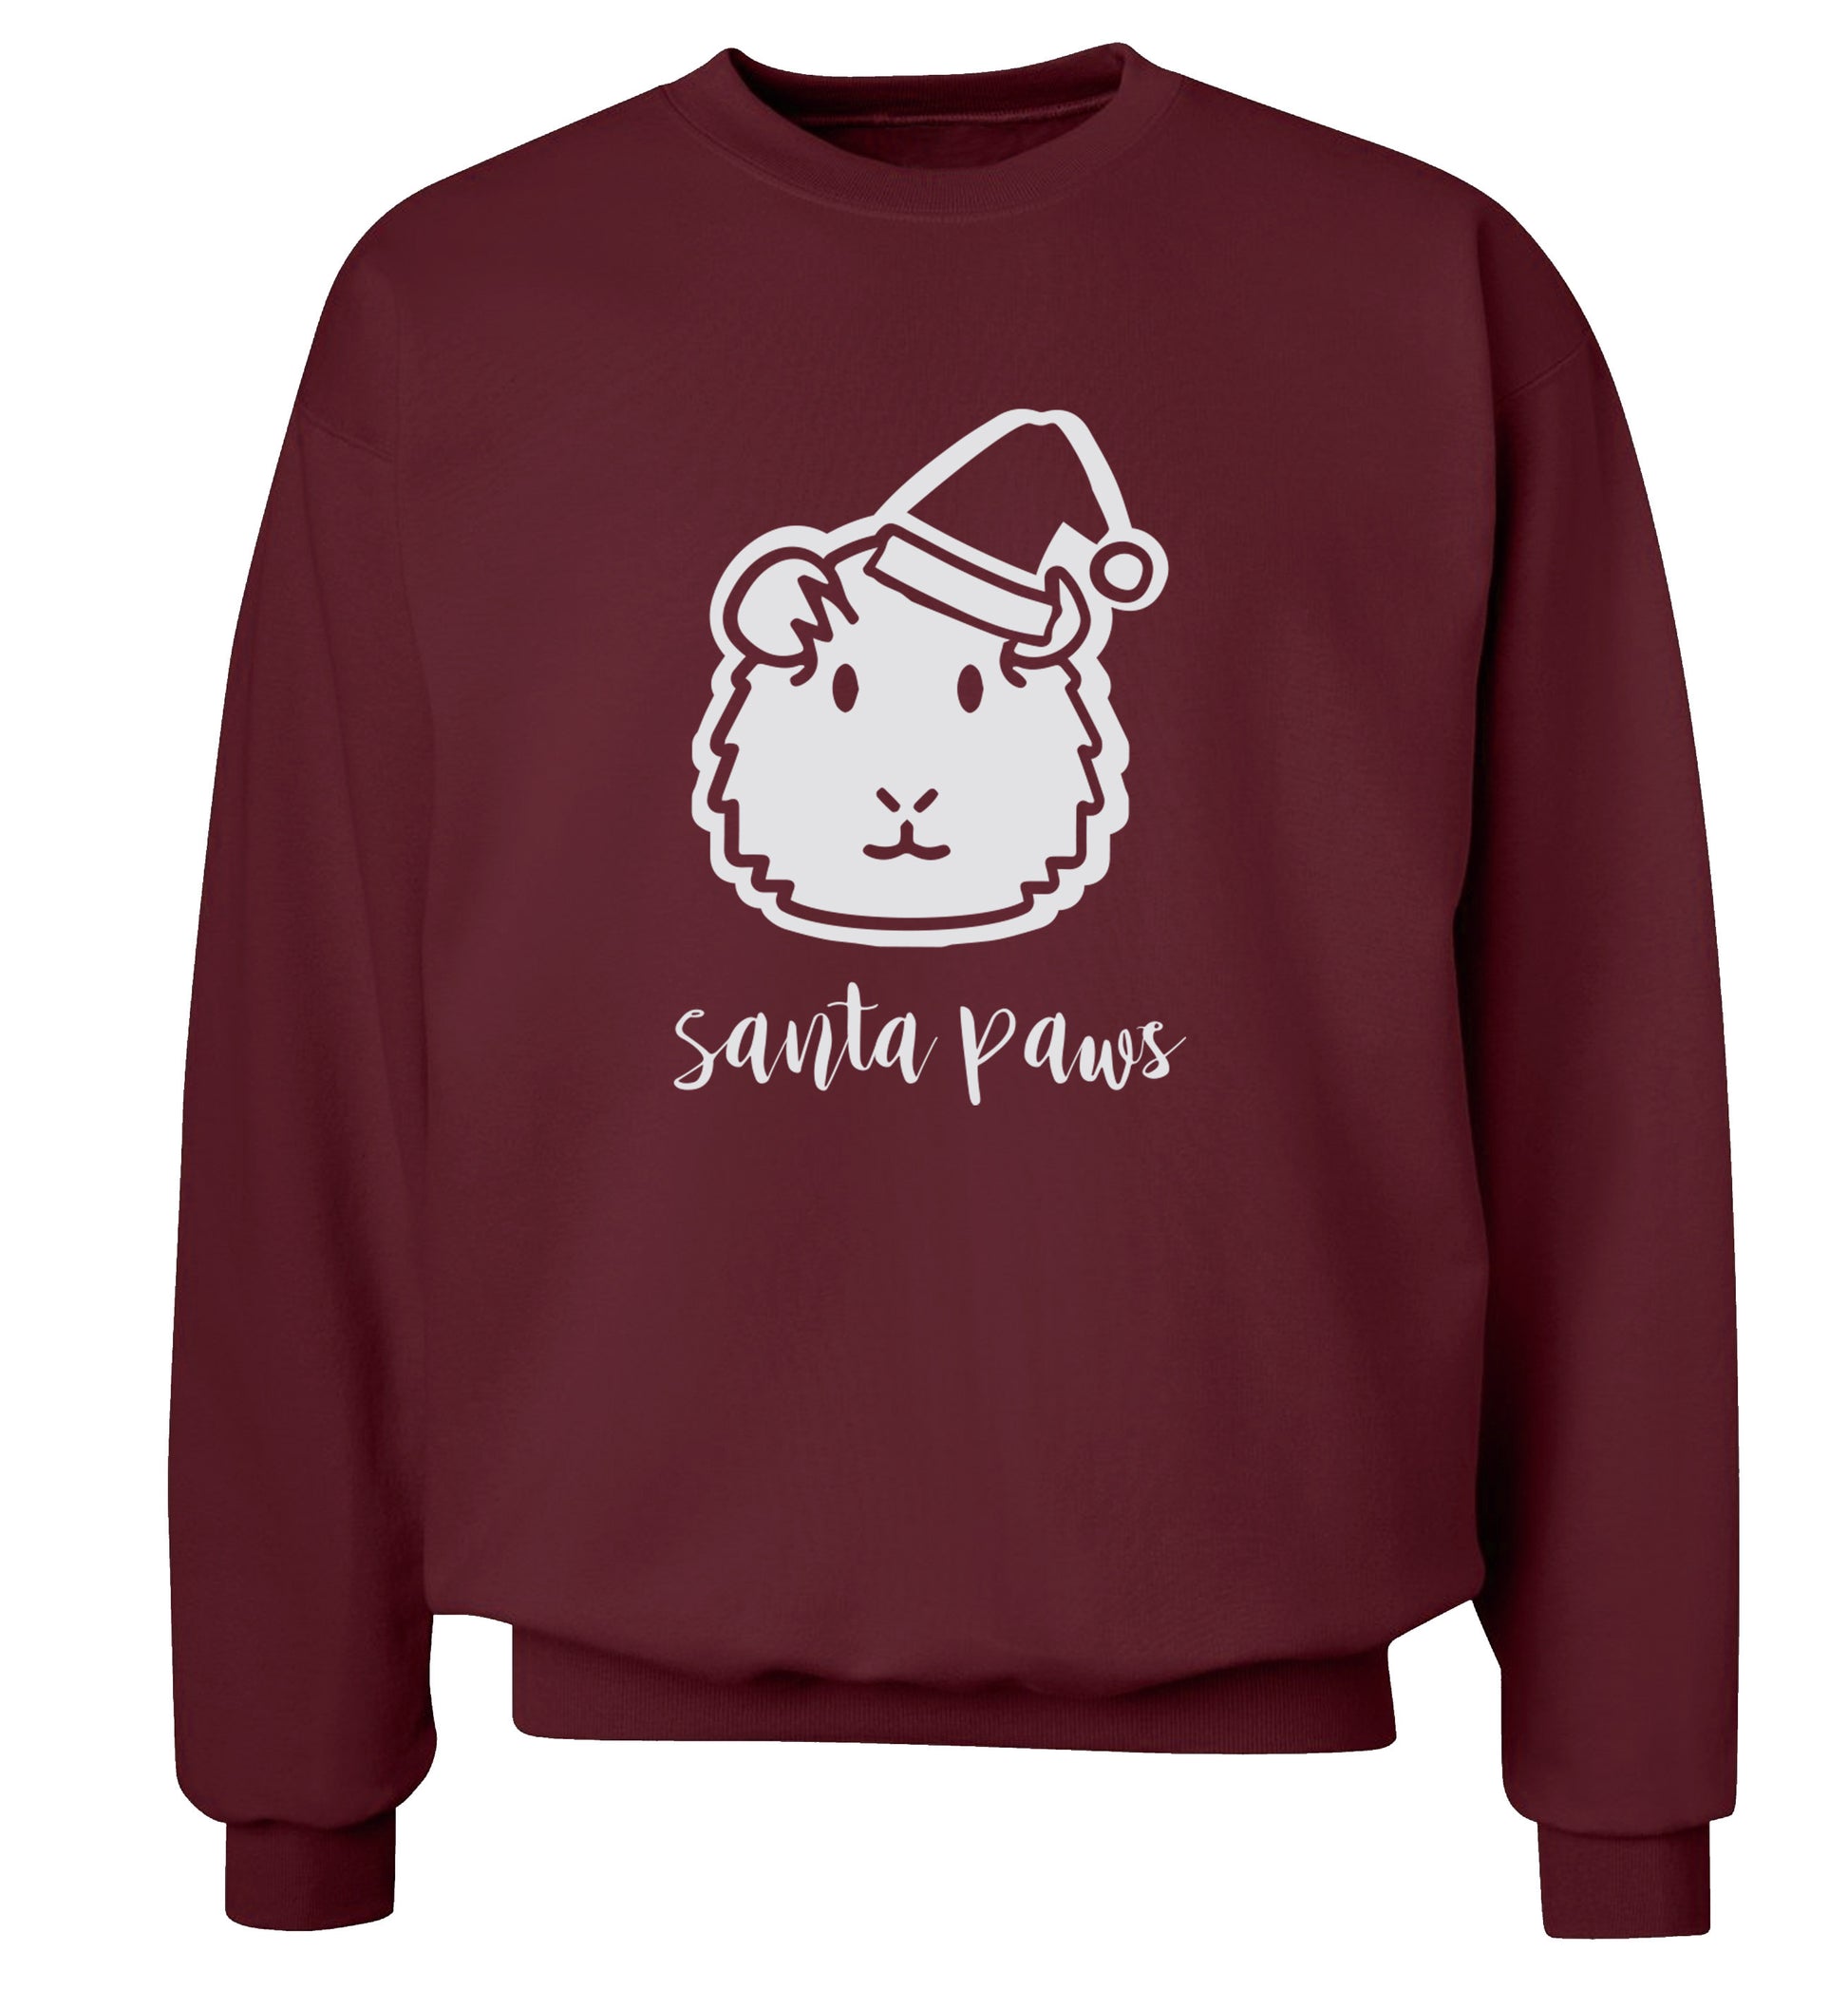 Guinea pig Santa Paws Adult's unisex maroon  sweater 2XL